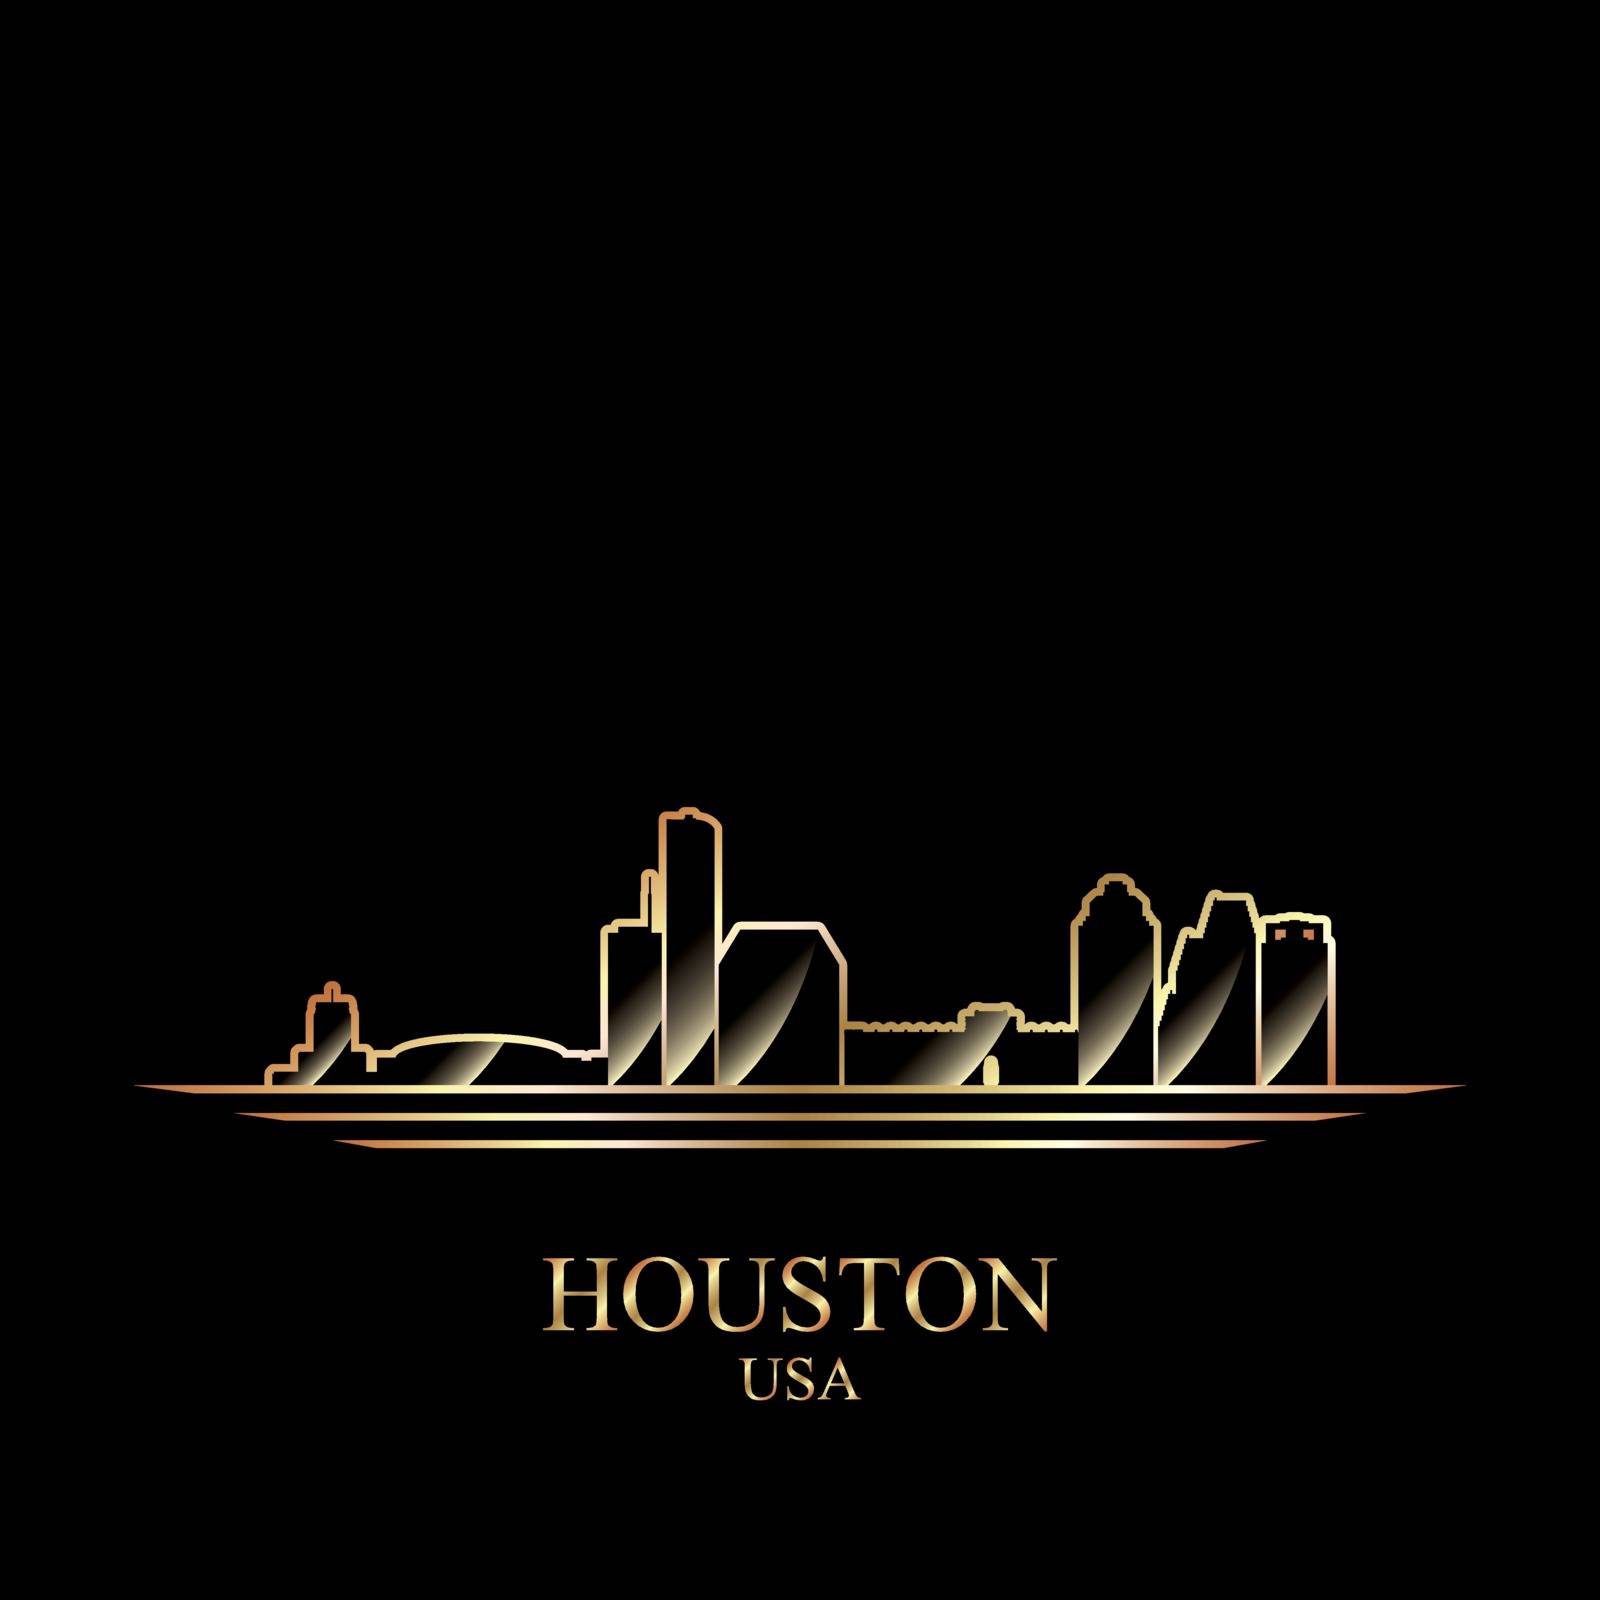 Gold silhouette of Houston on black background, vector illustration